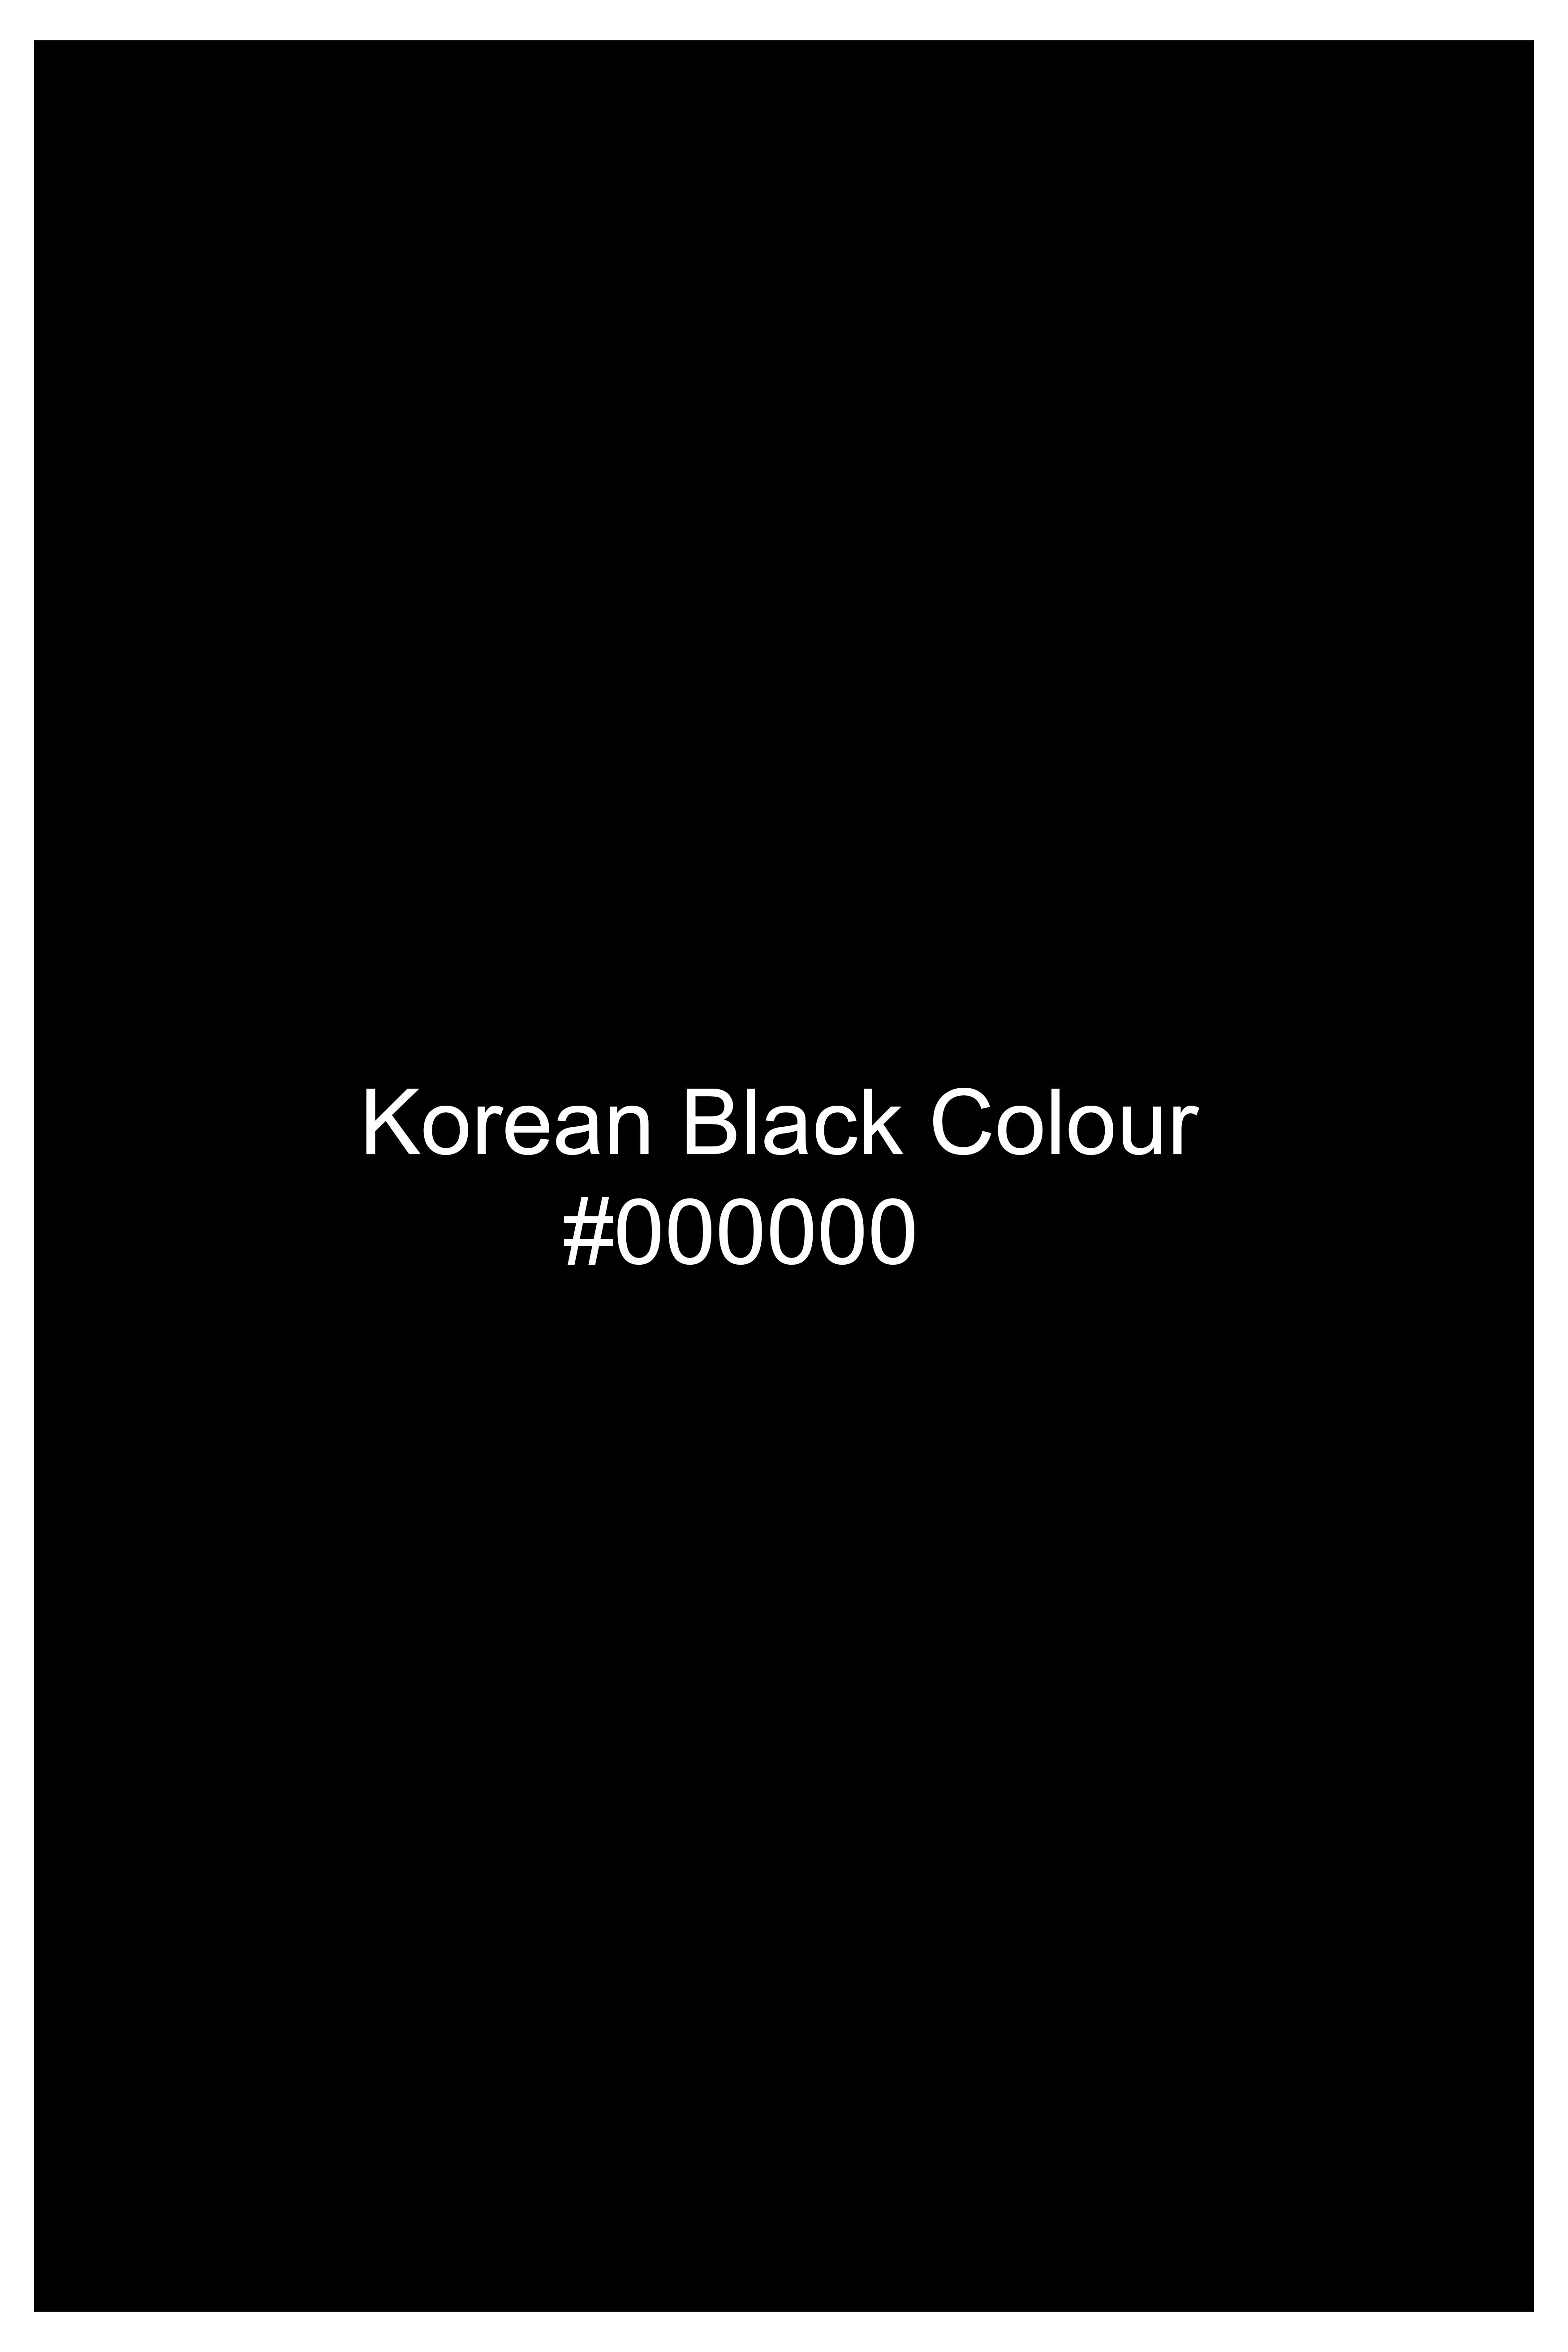 Korean Black (The Best Black We Have) Floral Embroidered Wool Rich Designer Tuxedo Blazer BL3274-SBP-BKPL-FB-E349-36, BL3274-SBP-BKPL-FB-E349-38, BL3274-SBP-BKPL-FB-E349-40, BL3274-SBP-BKPL-FB-E349-42, BL3274-SBP-BKPL-FB-E349-44, BL3274-SBP-BKPL-FB-E349-46, BL3274-SBP-BKPL-FB-E349-48, BL3274-SBP-BKPL-FB-E349-50, BL3274-SBP-BKPL-FB-E349-52, BL3274-SBP-BKPL-FB-E349-54, BL3274-SBP-BKPL-FB-E349-56, BL3274-SBP-BKPL-FB-E349-58, BL3274-SBP-BKPL-FB-E349-60